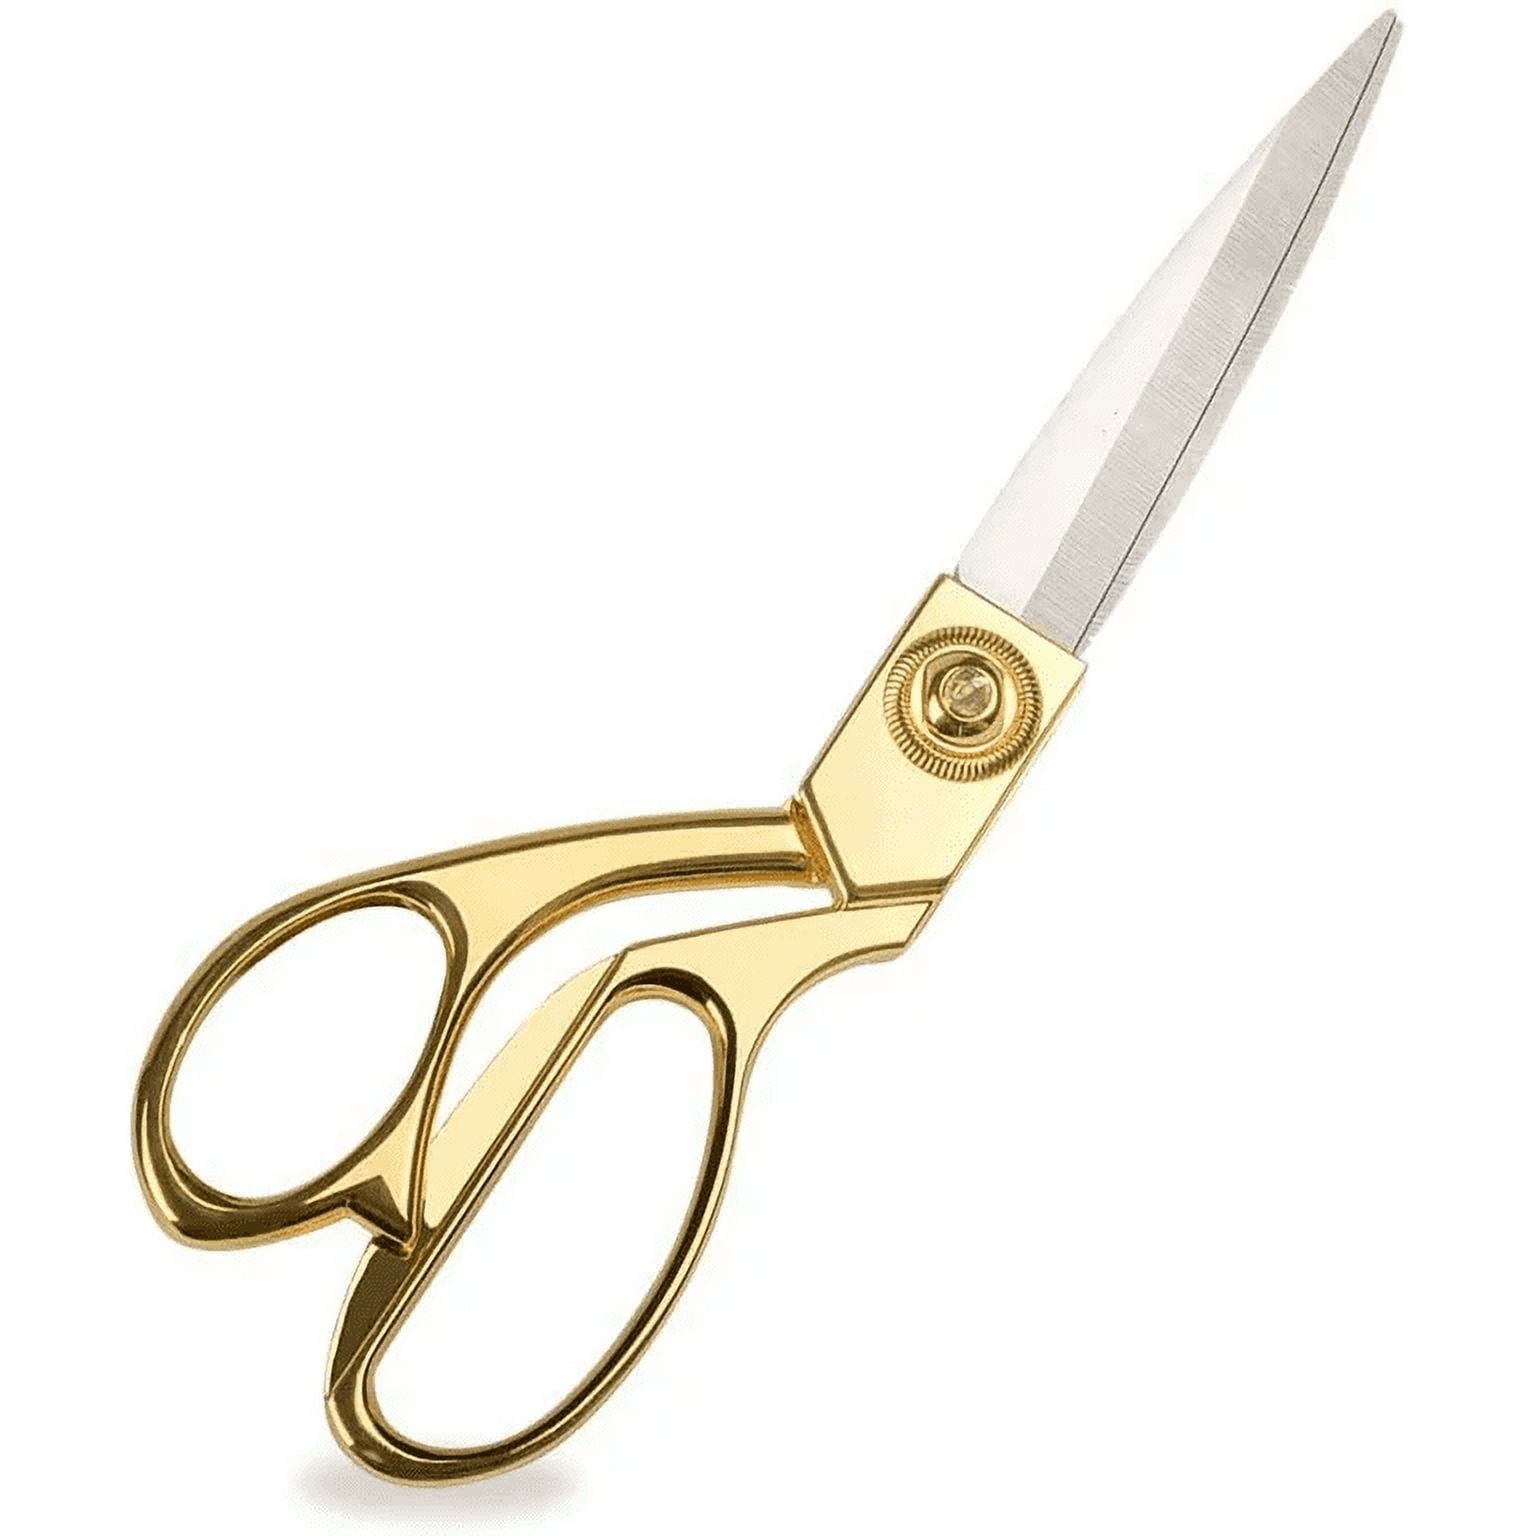  Mr. Pen- Fabric Scissors, 8-inch Rose Gold Premium Tailor  Scissors, Sewing Scissors for Fabric Cutting, Fabric Cutter, Fabric Shears, Fabric  Scissors Professional, Heavy Duty Scissors Heavy Duty : Arts, Crafts 